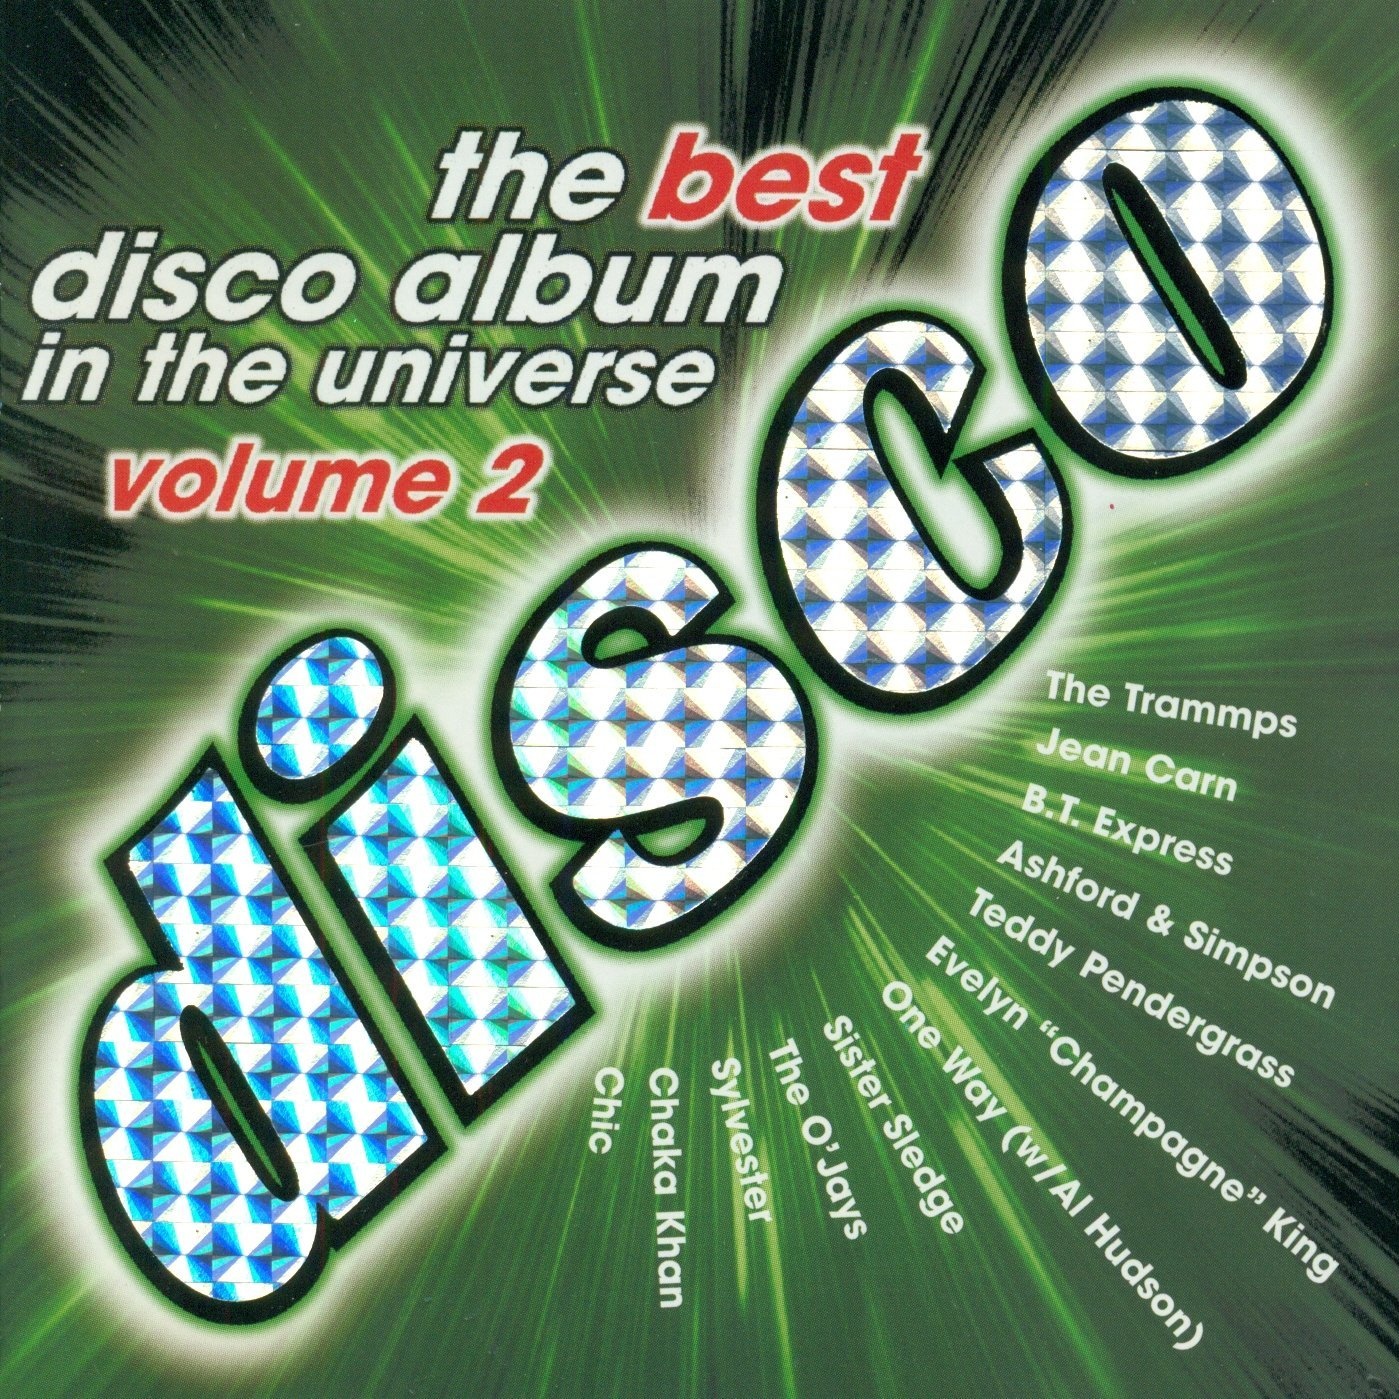 The Best Disco Album in the Universe Volume 2